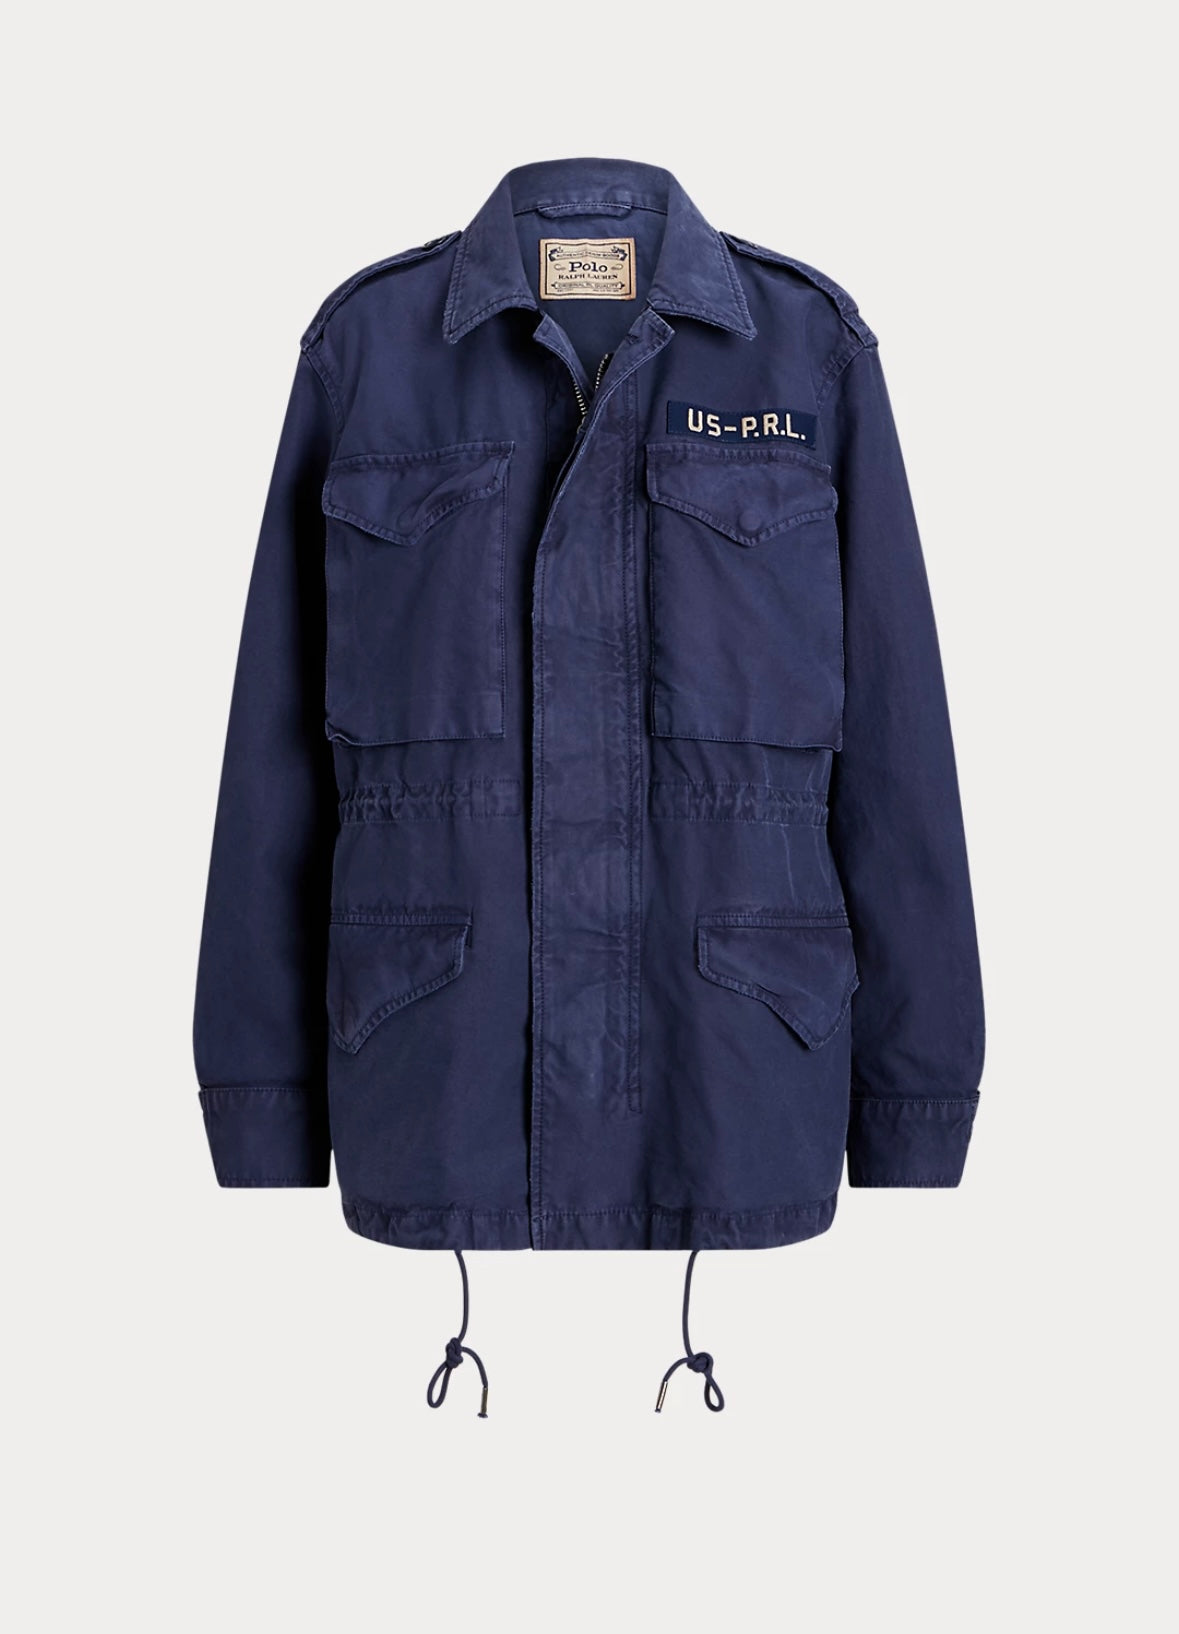 Polo Ralph Lauren jacket - Boathouse Navy